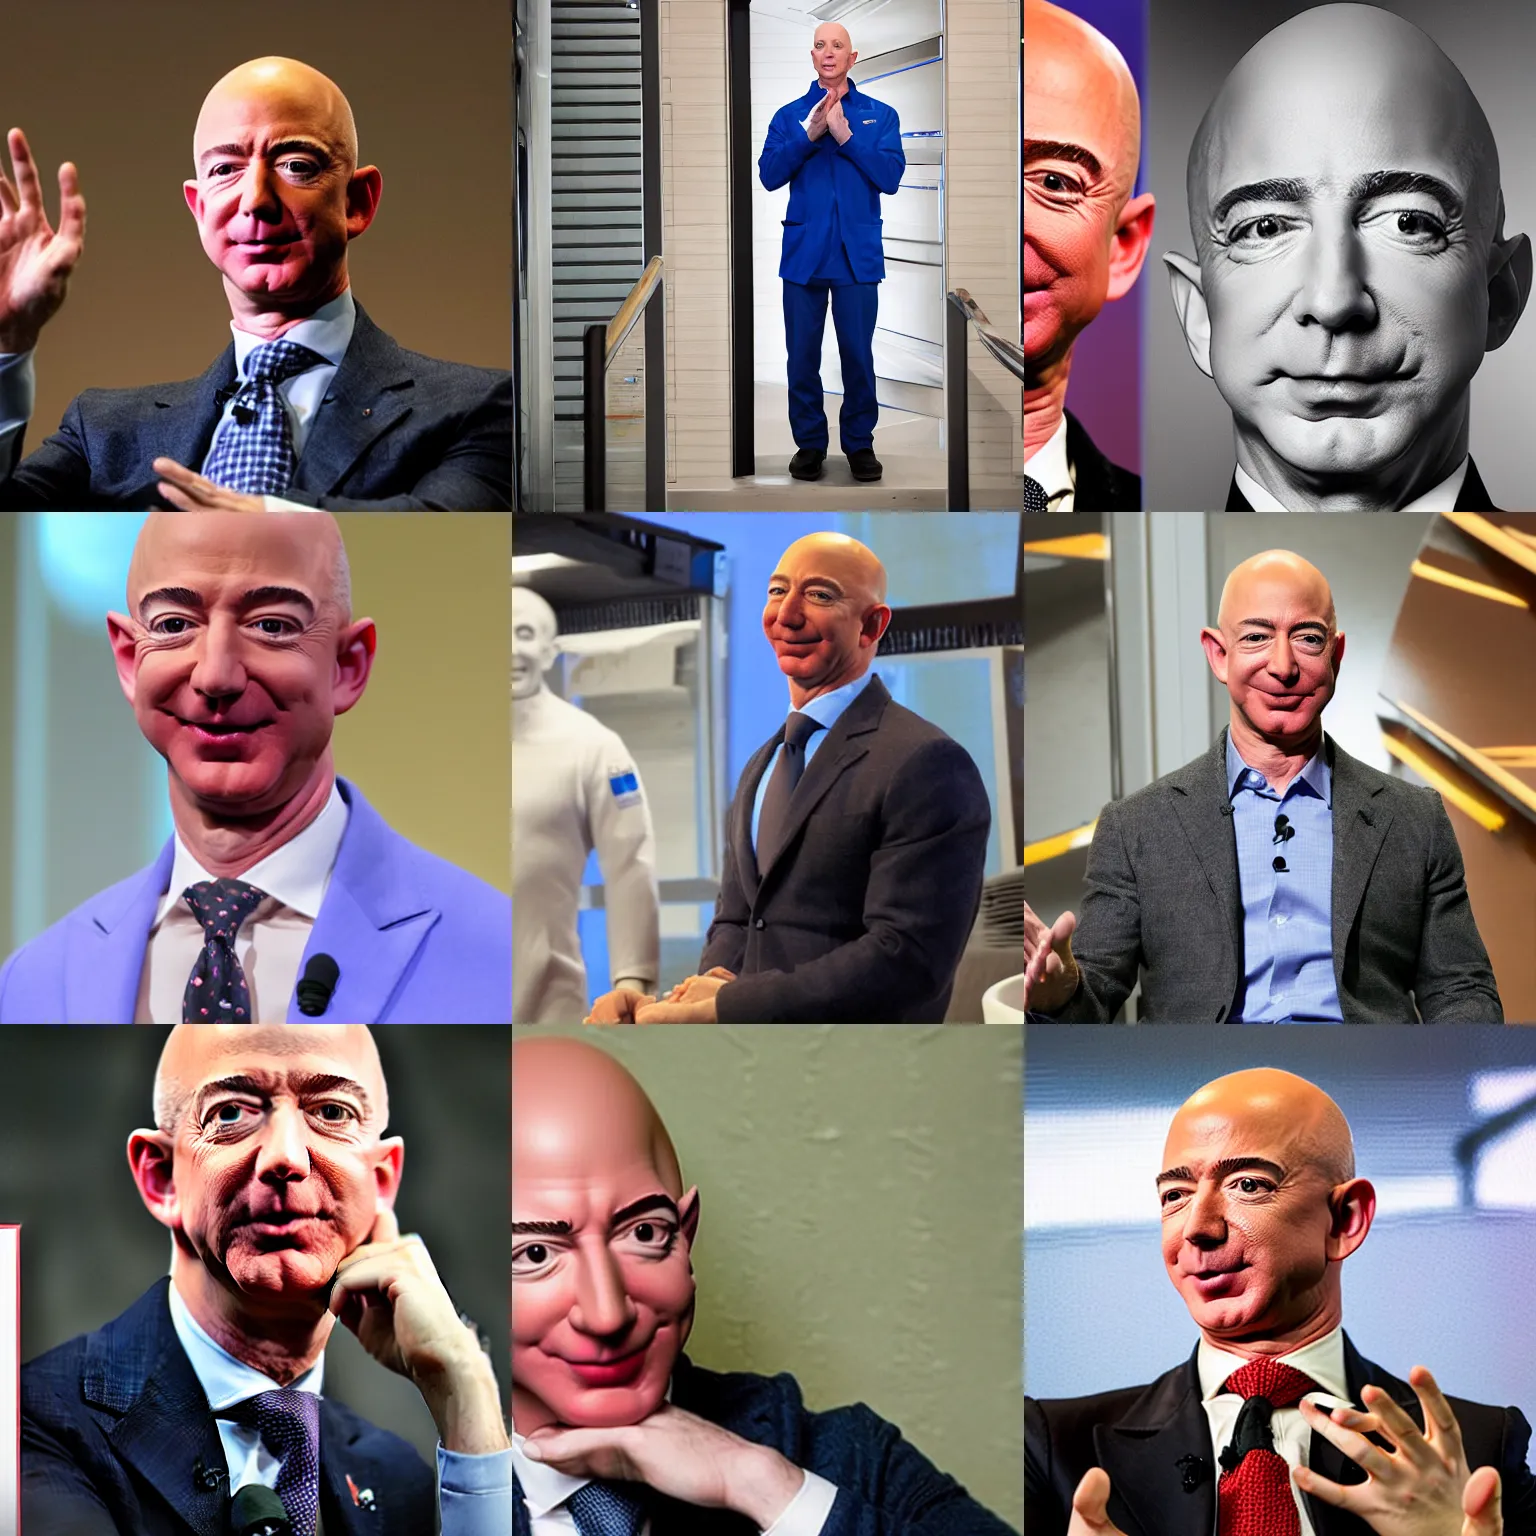 Prompt: Jeff Bezos as Dr Evil